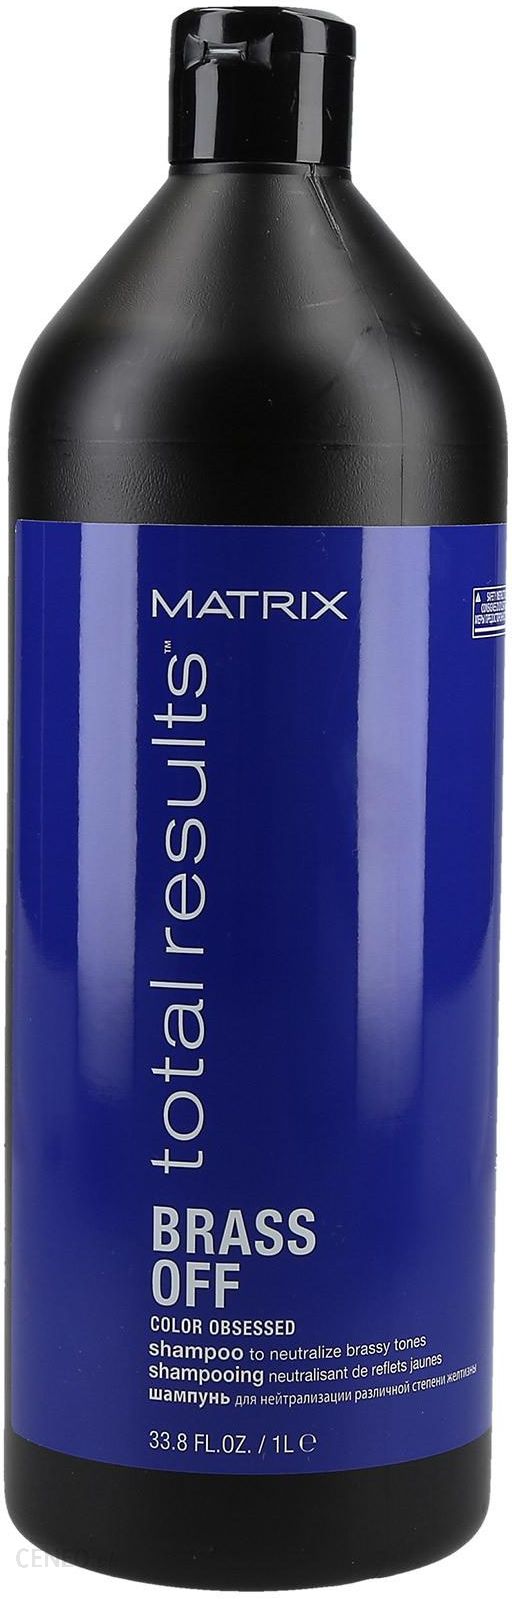 matrix brass off szampon cena 1000ml